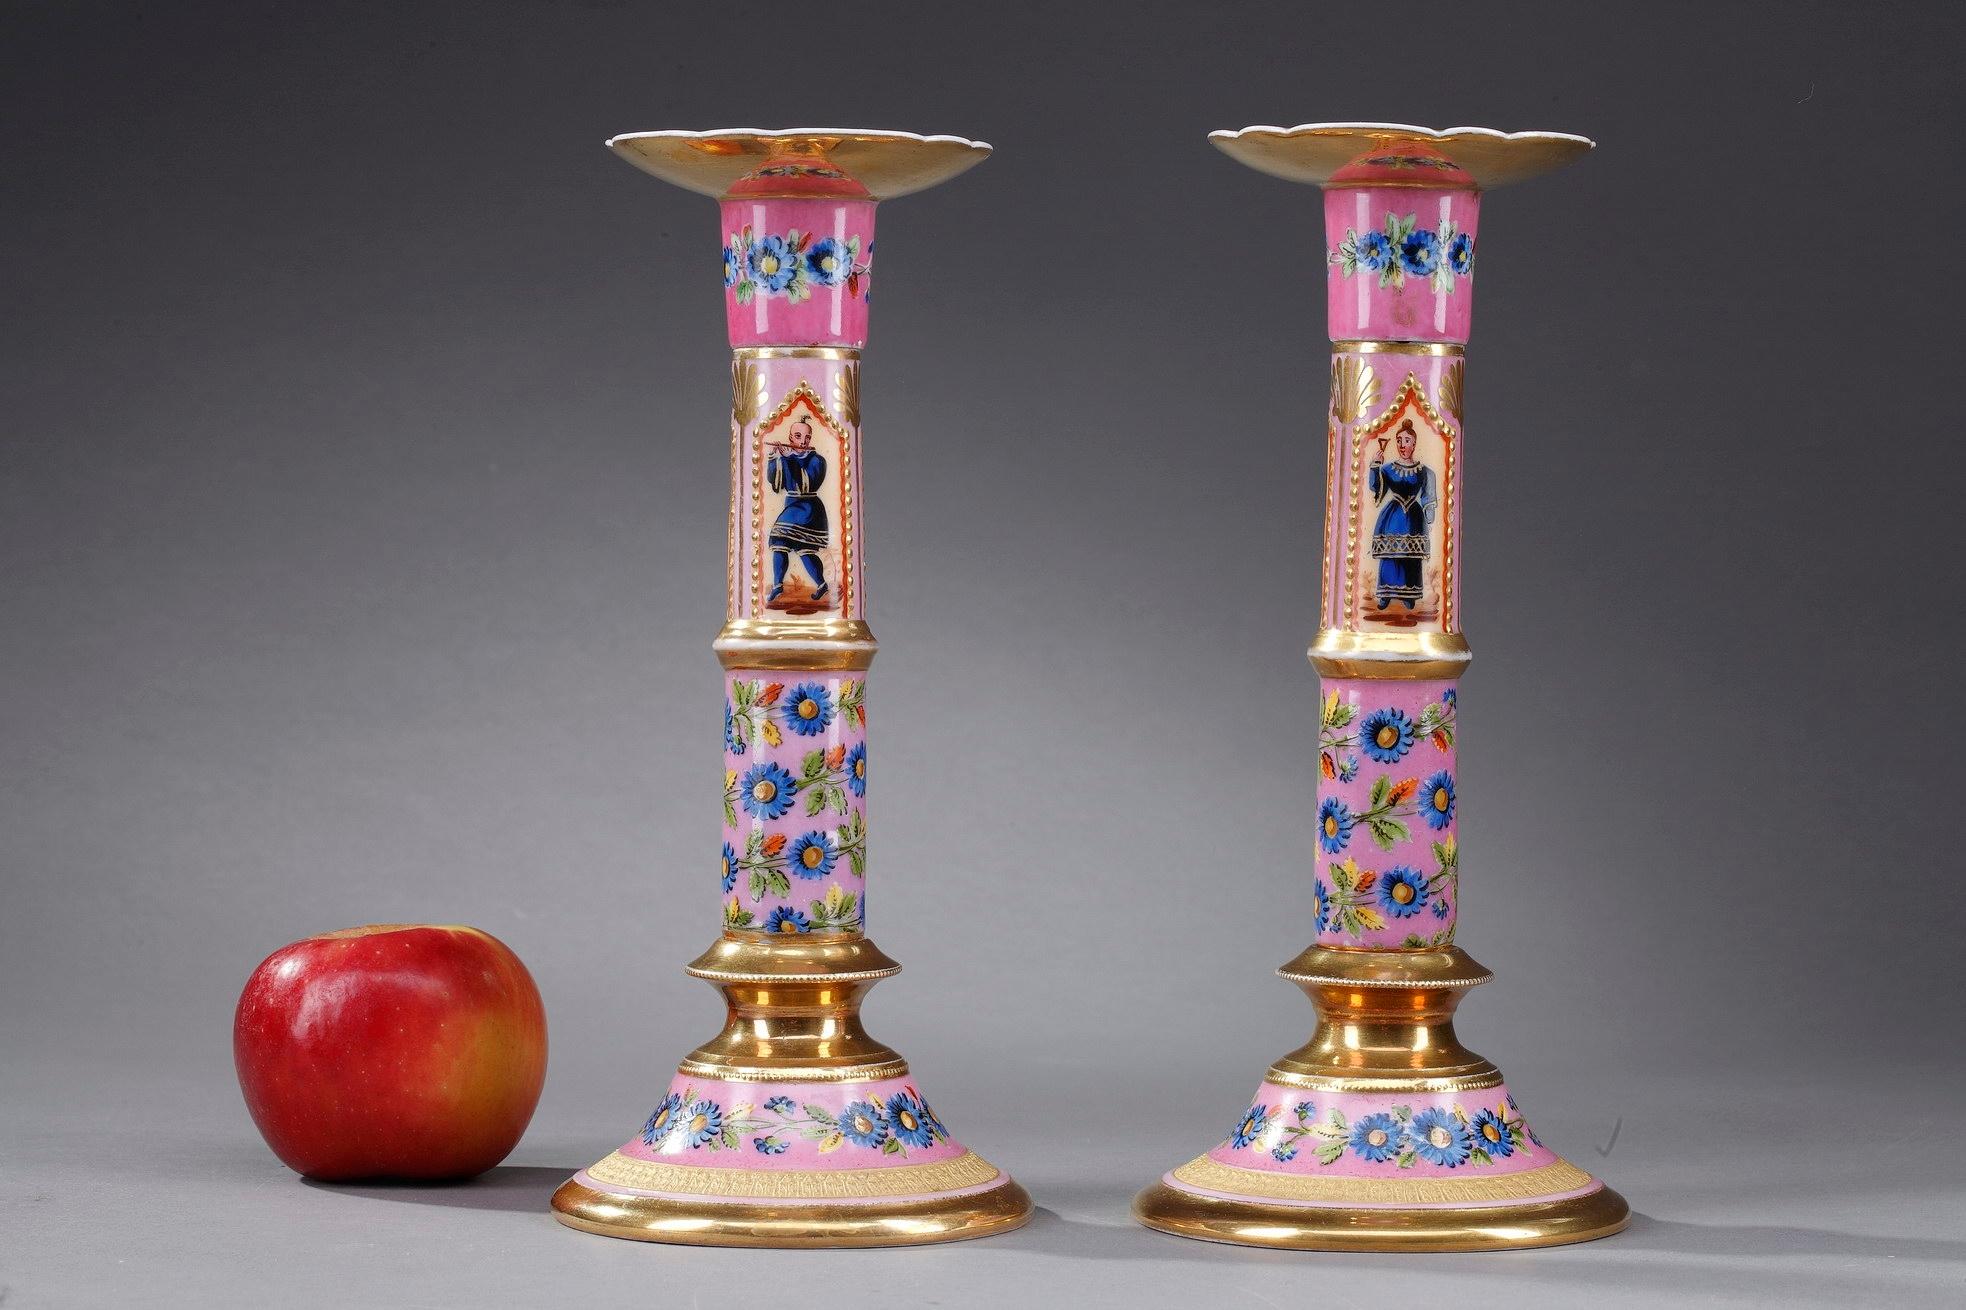 Restauration 19th Century Polychrome Porcelain Candlesticks, Set of 2